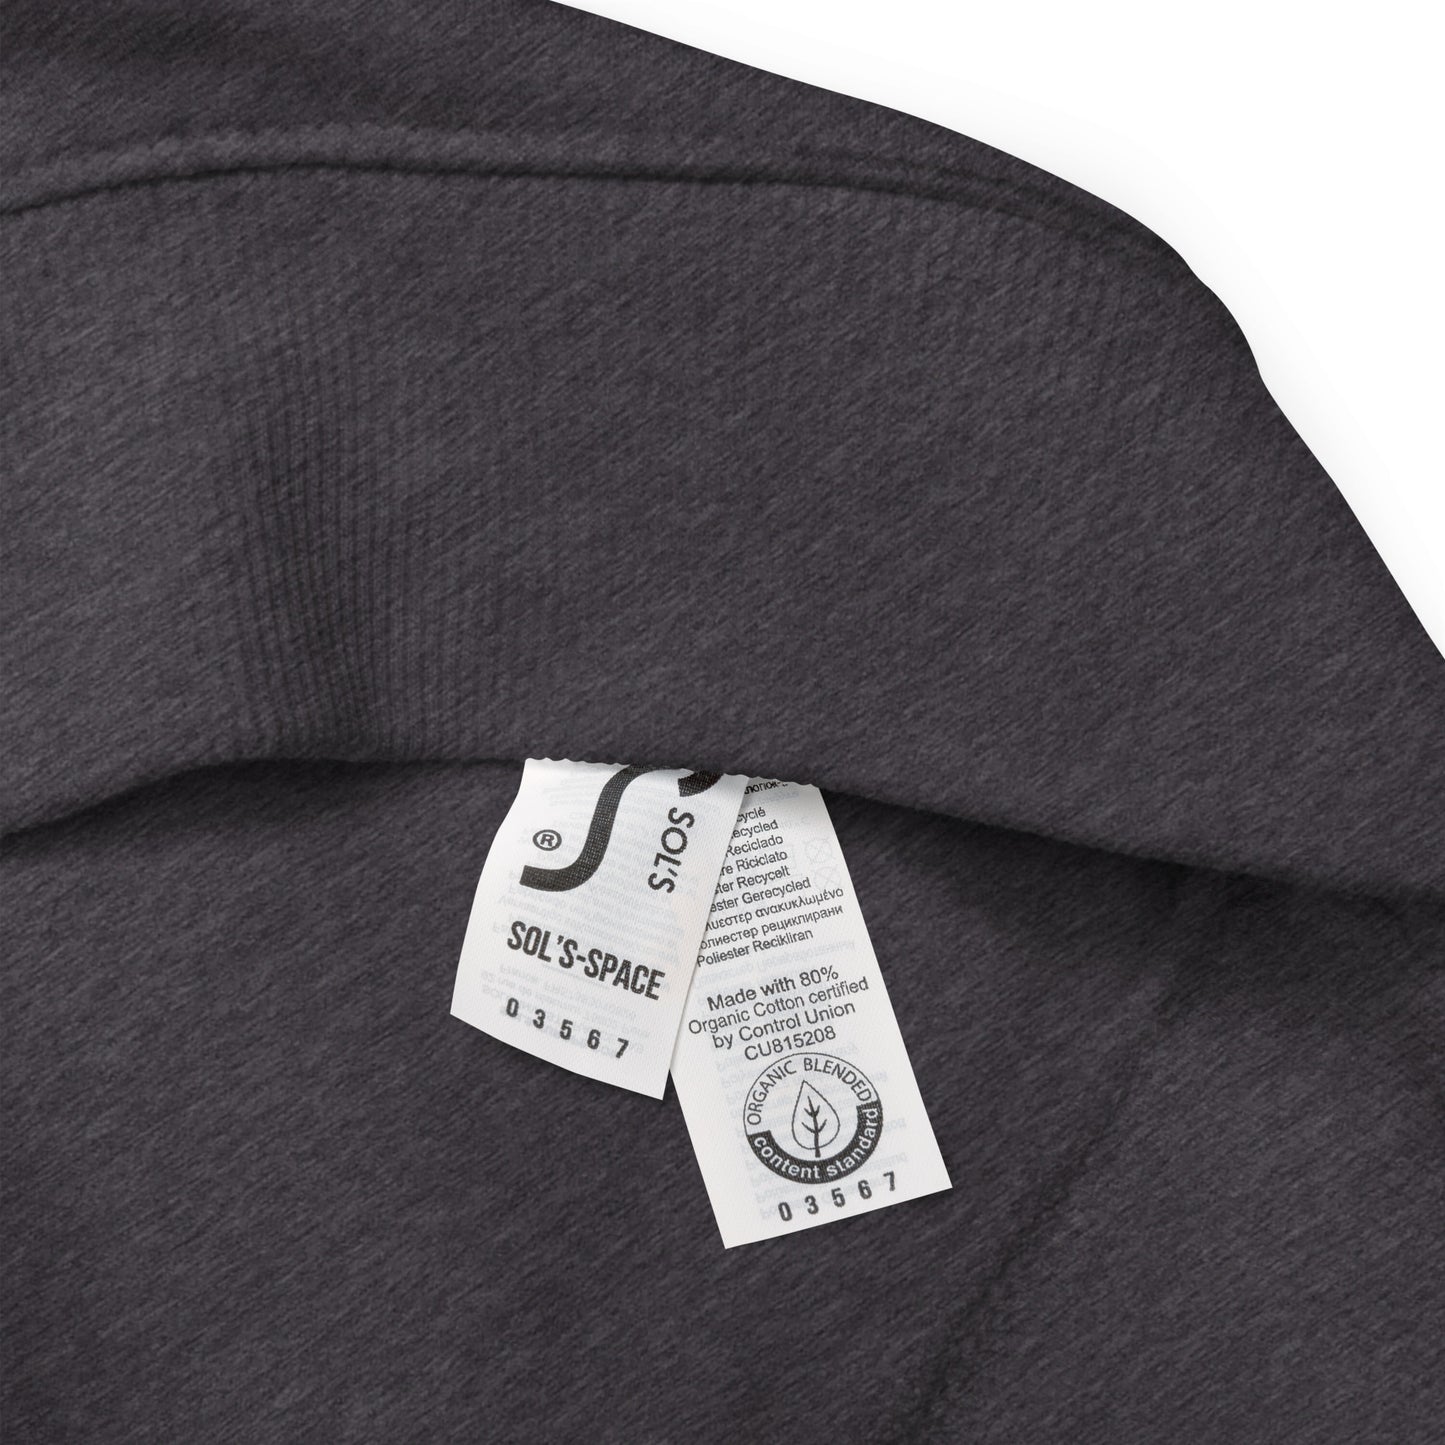 Unisex organic sweatshirt/Coloful-Elephant